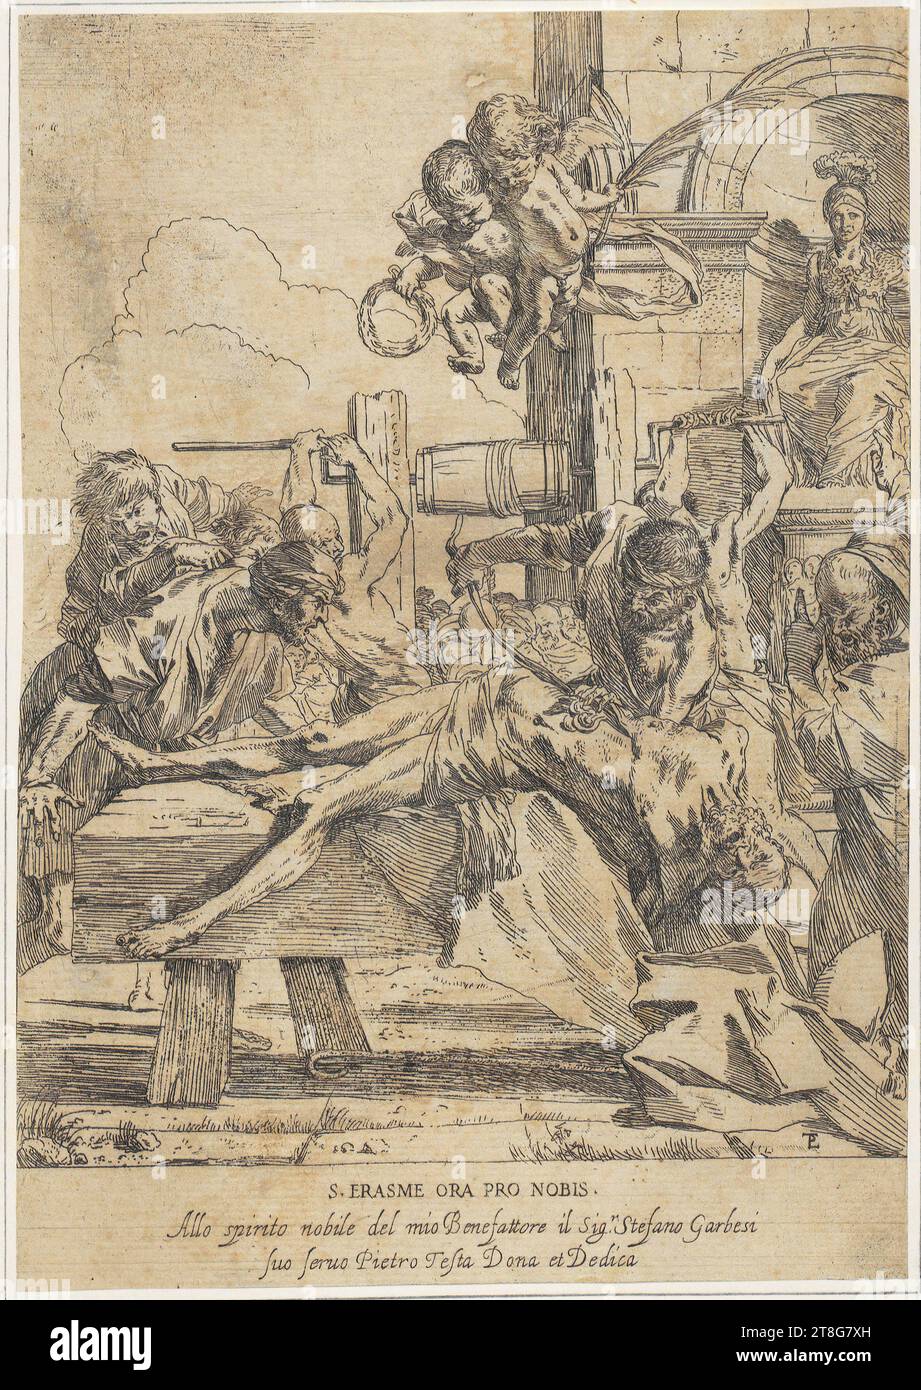 Pietro Testa (1612 - 1650)Pietro Berrettini (1596 - 1669), after Nicolas Poussin (1594 - 1665), after, Martyrdom of St. Erasmus, print carrier origin: 1630 - 1631, etching, duplicated, sheet size: 26.5 x 18.5 cm carrier size: 45.7 x 31.0 cm, monogrammed lower right 'PT' and inscribed lower center 'S. ERASME ORA PRO NOBIS., Allo spirito Stock Photo